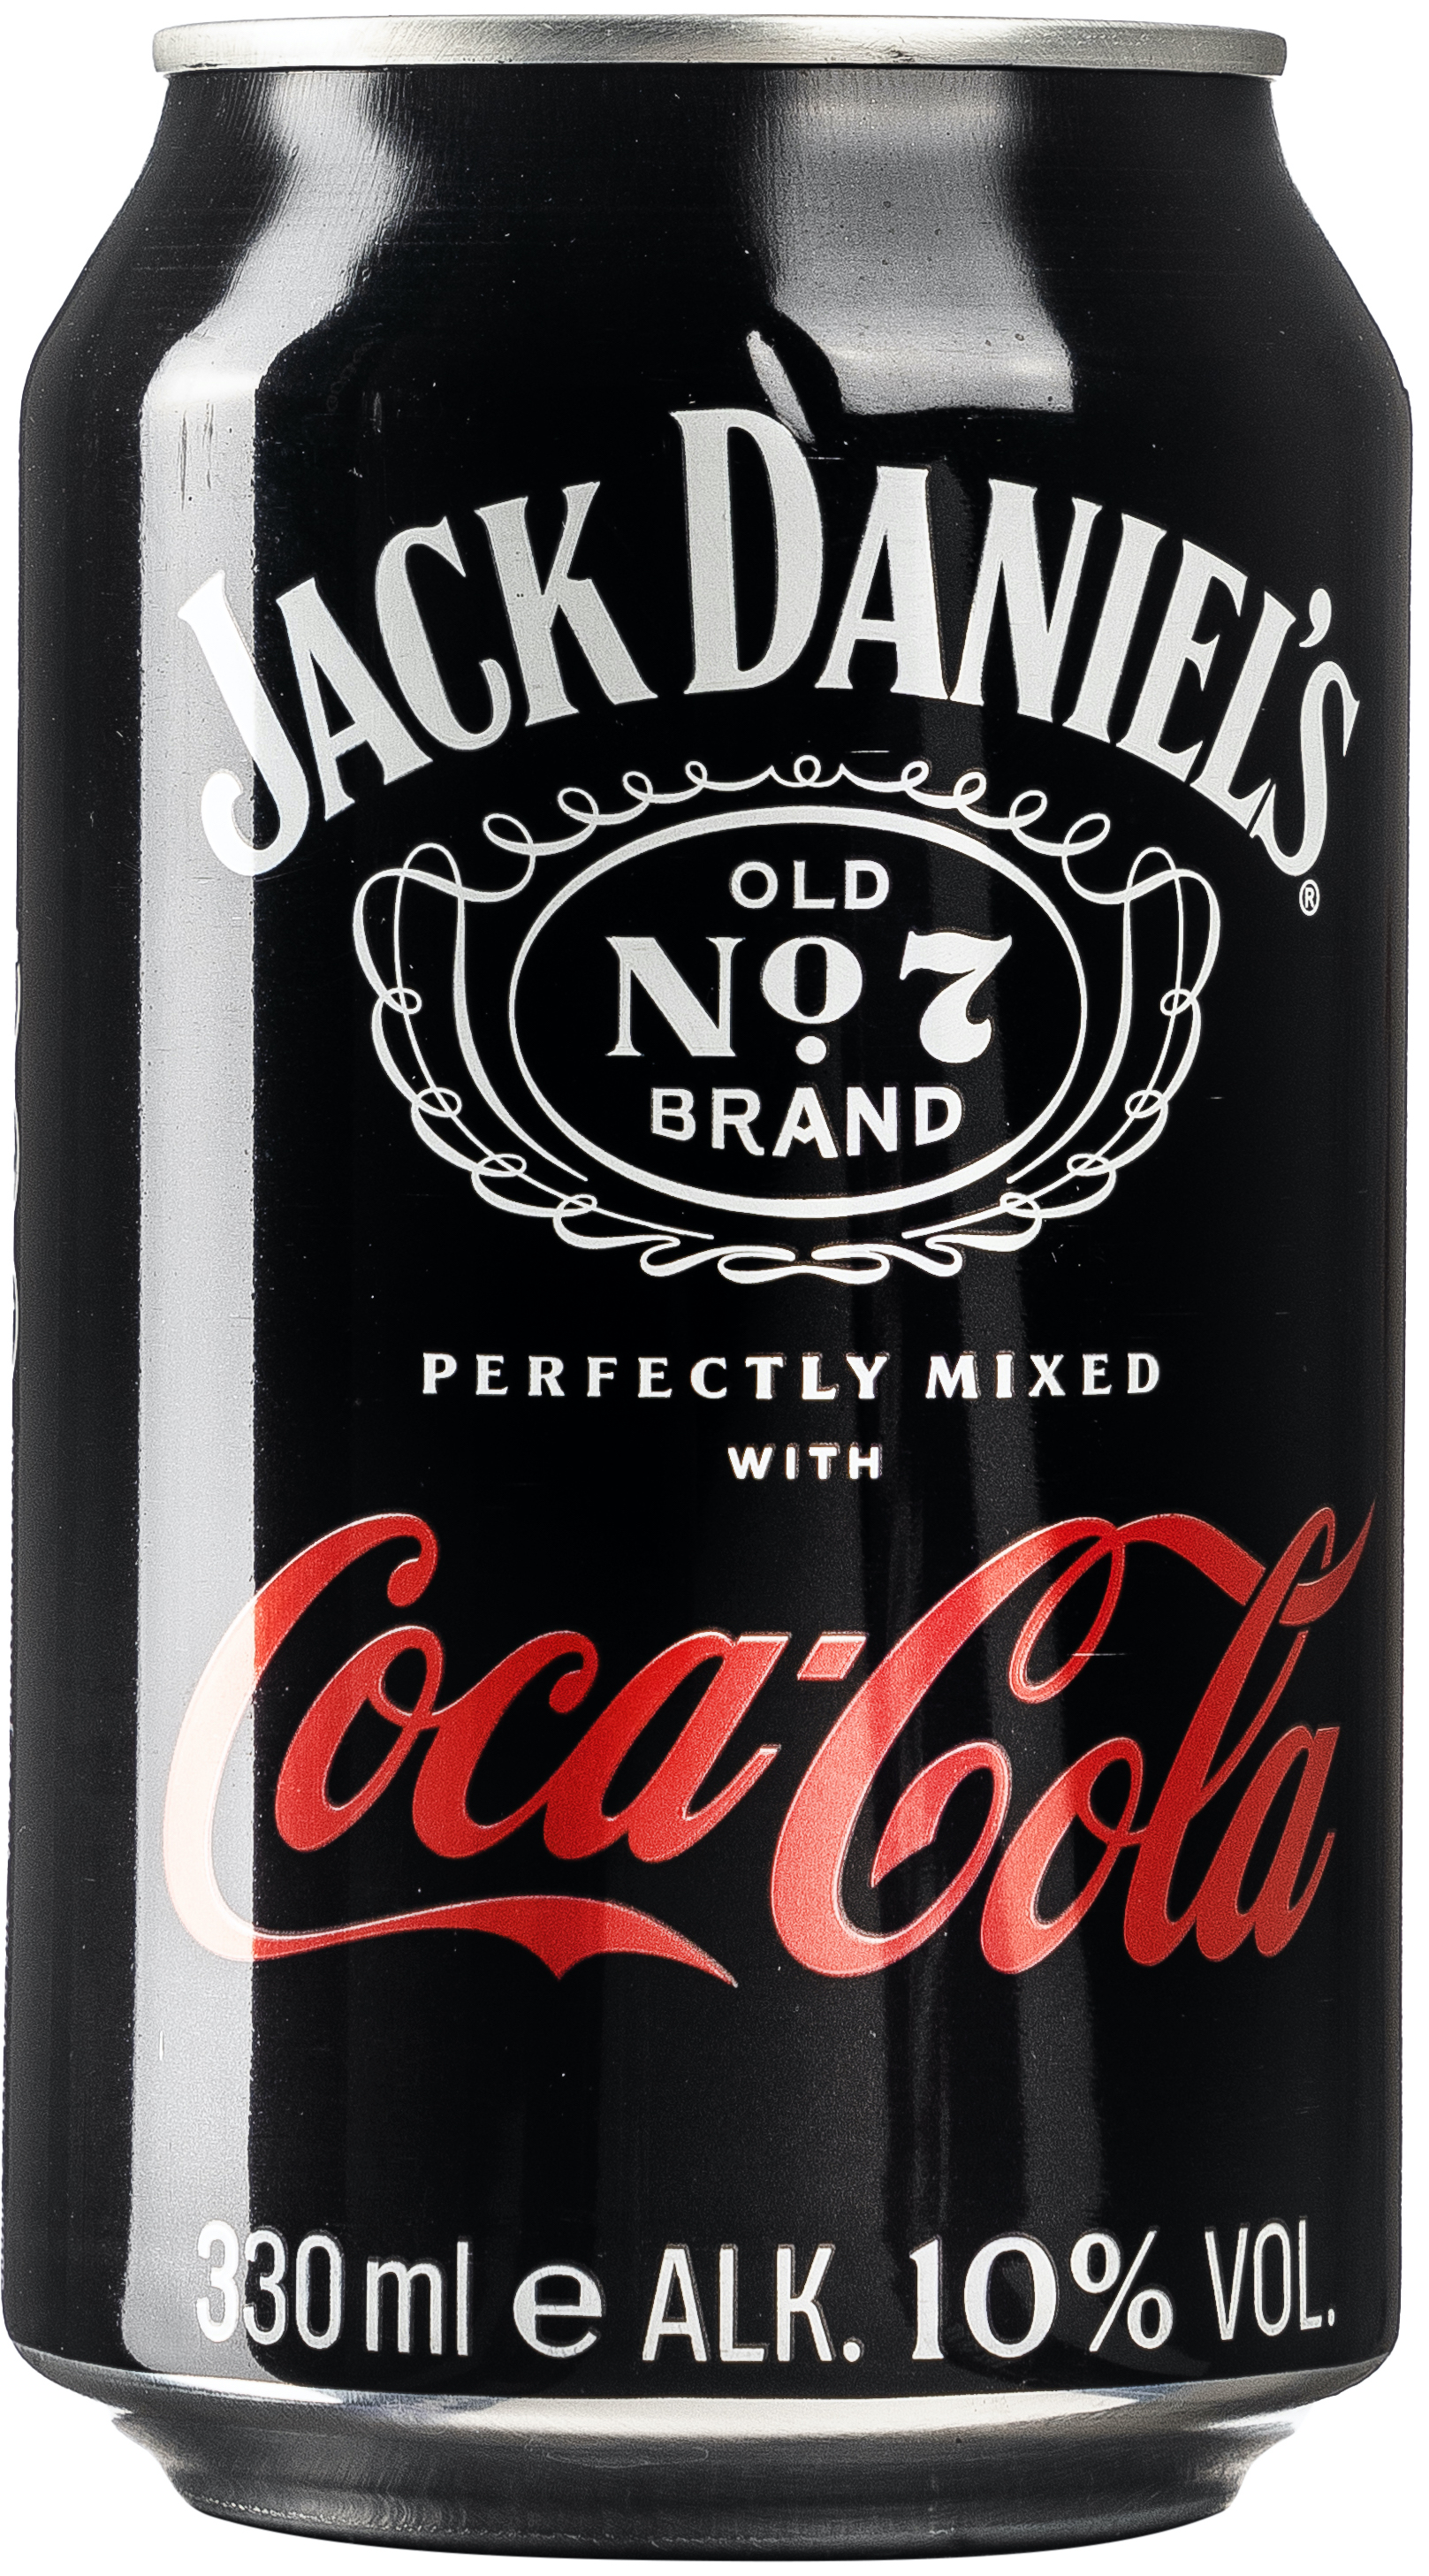 Jack Daniels Cola 10% vol. 0,33L EINWEG